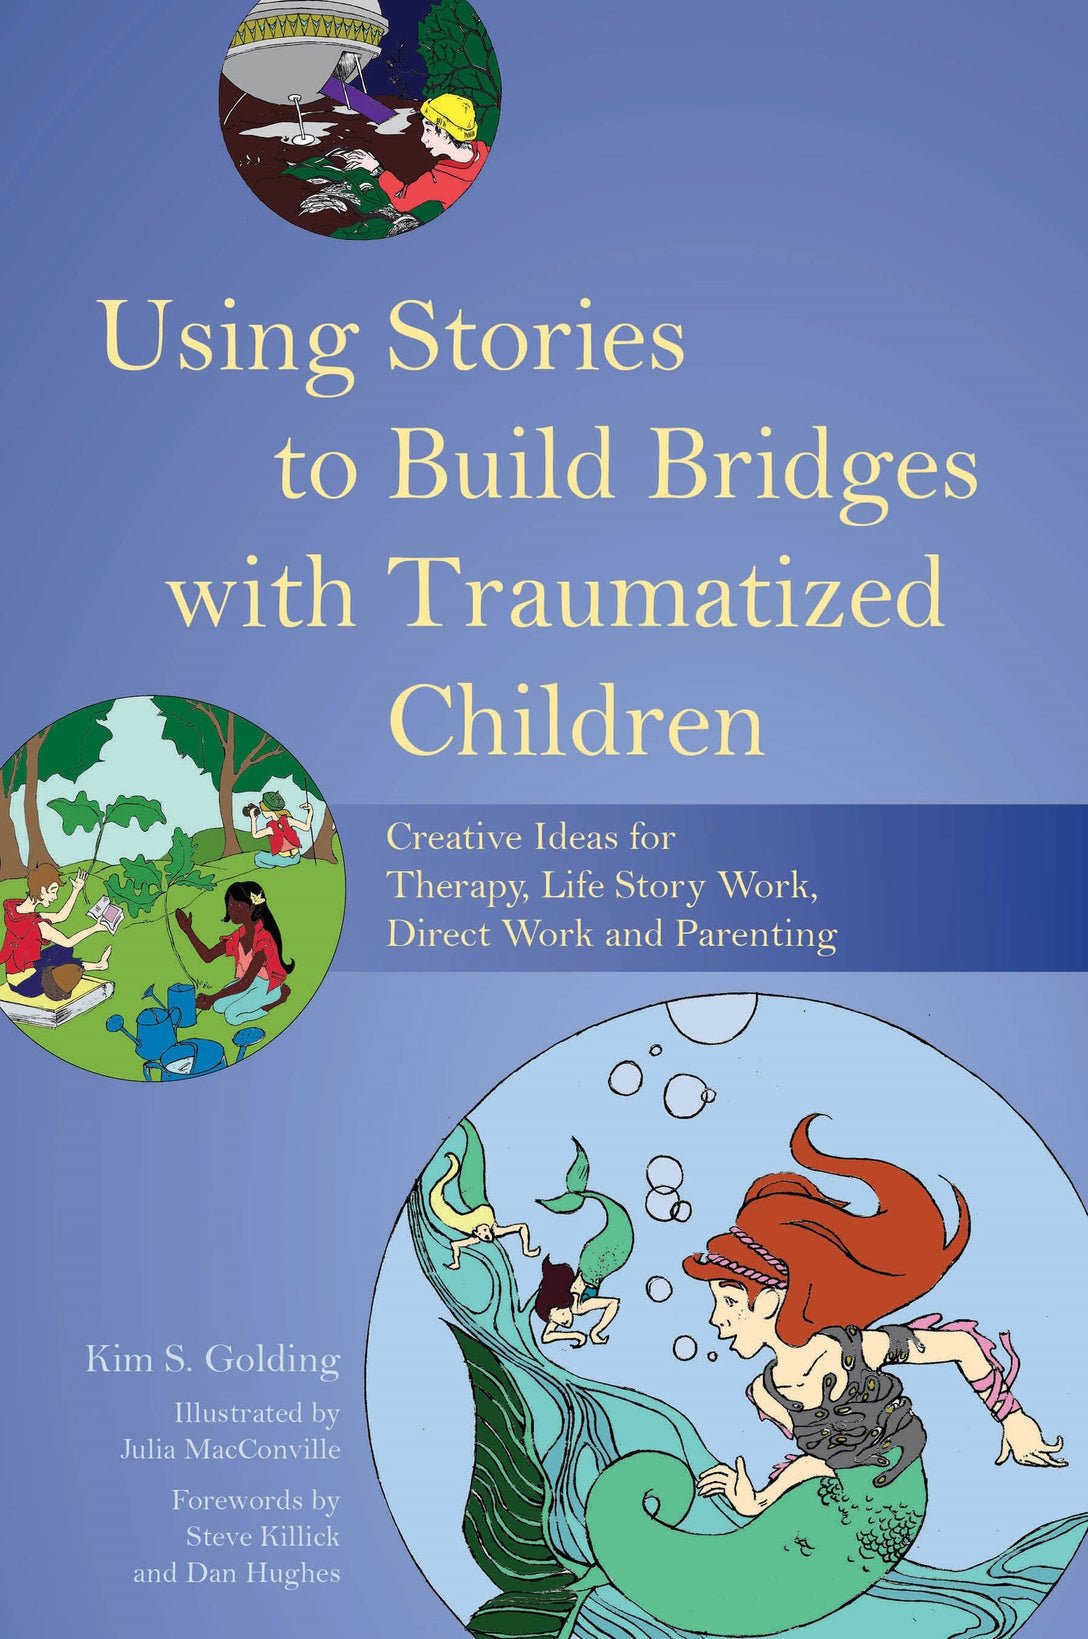 Using Stories to Build Bridges with Traumatized Children by Julia McConville, Kim S. Golding, Steve Killick, Dan Hughes